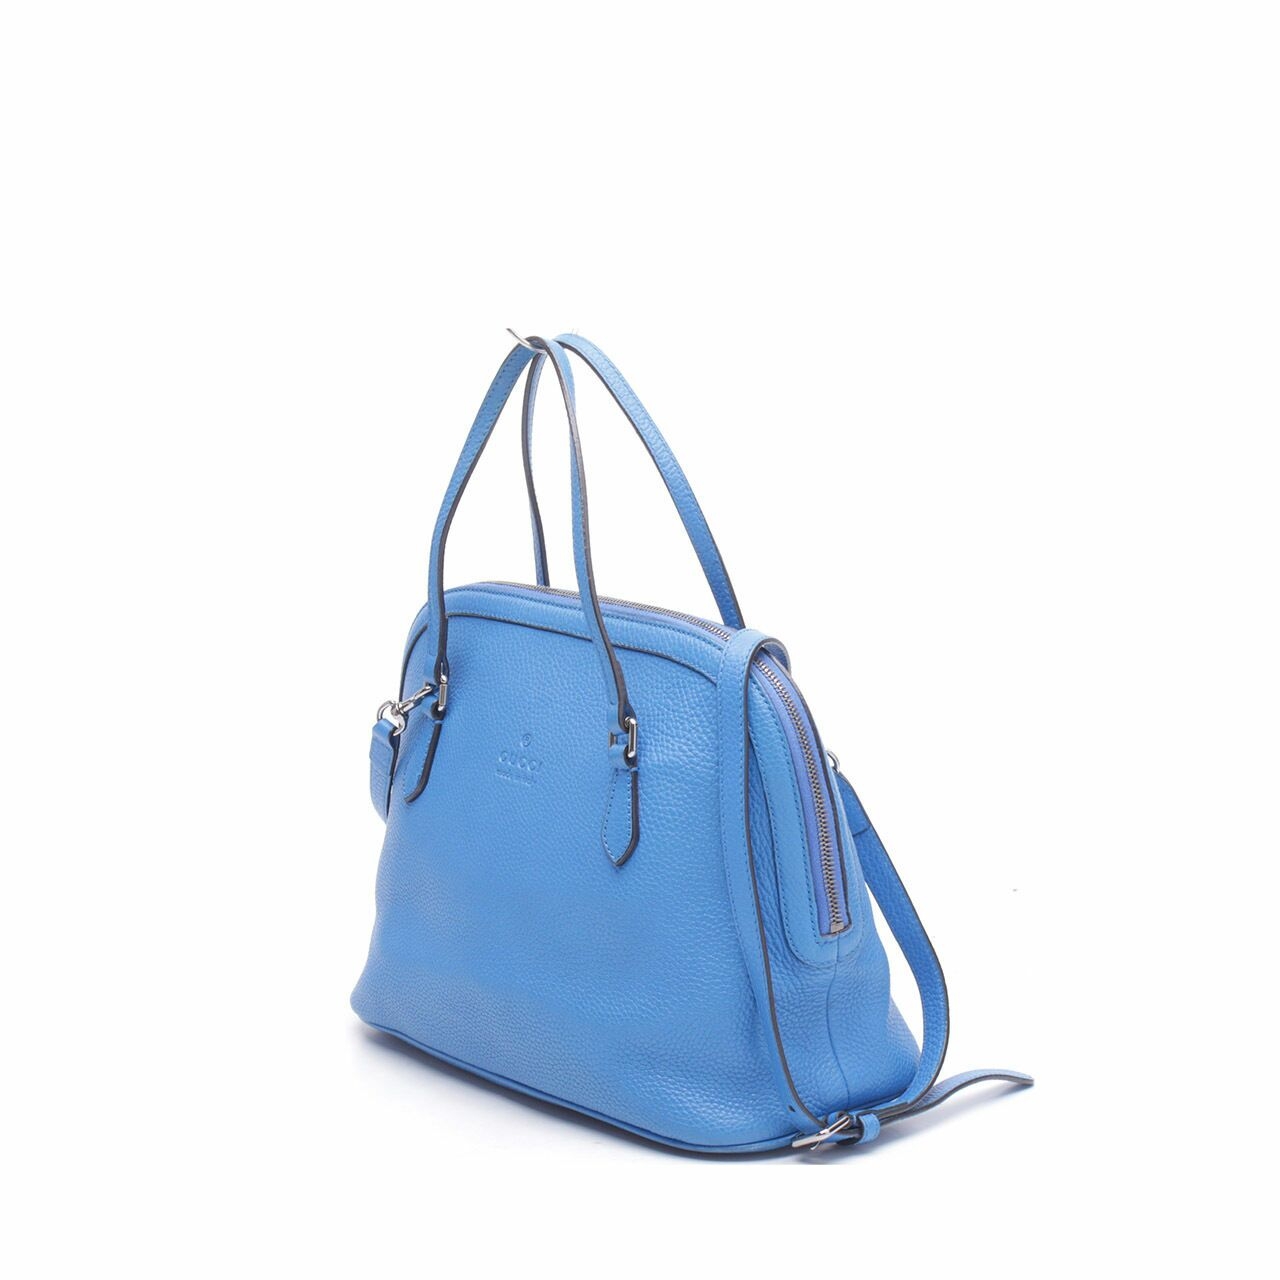 Gucci Dome Medium Zip Top Blue Leather Satchel Bag